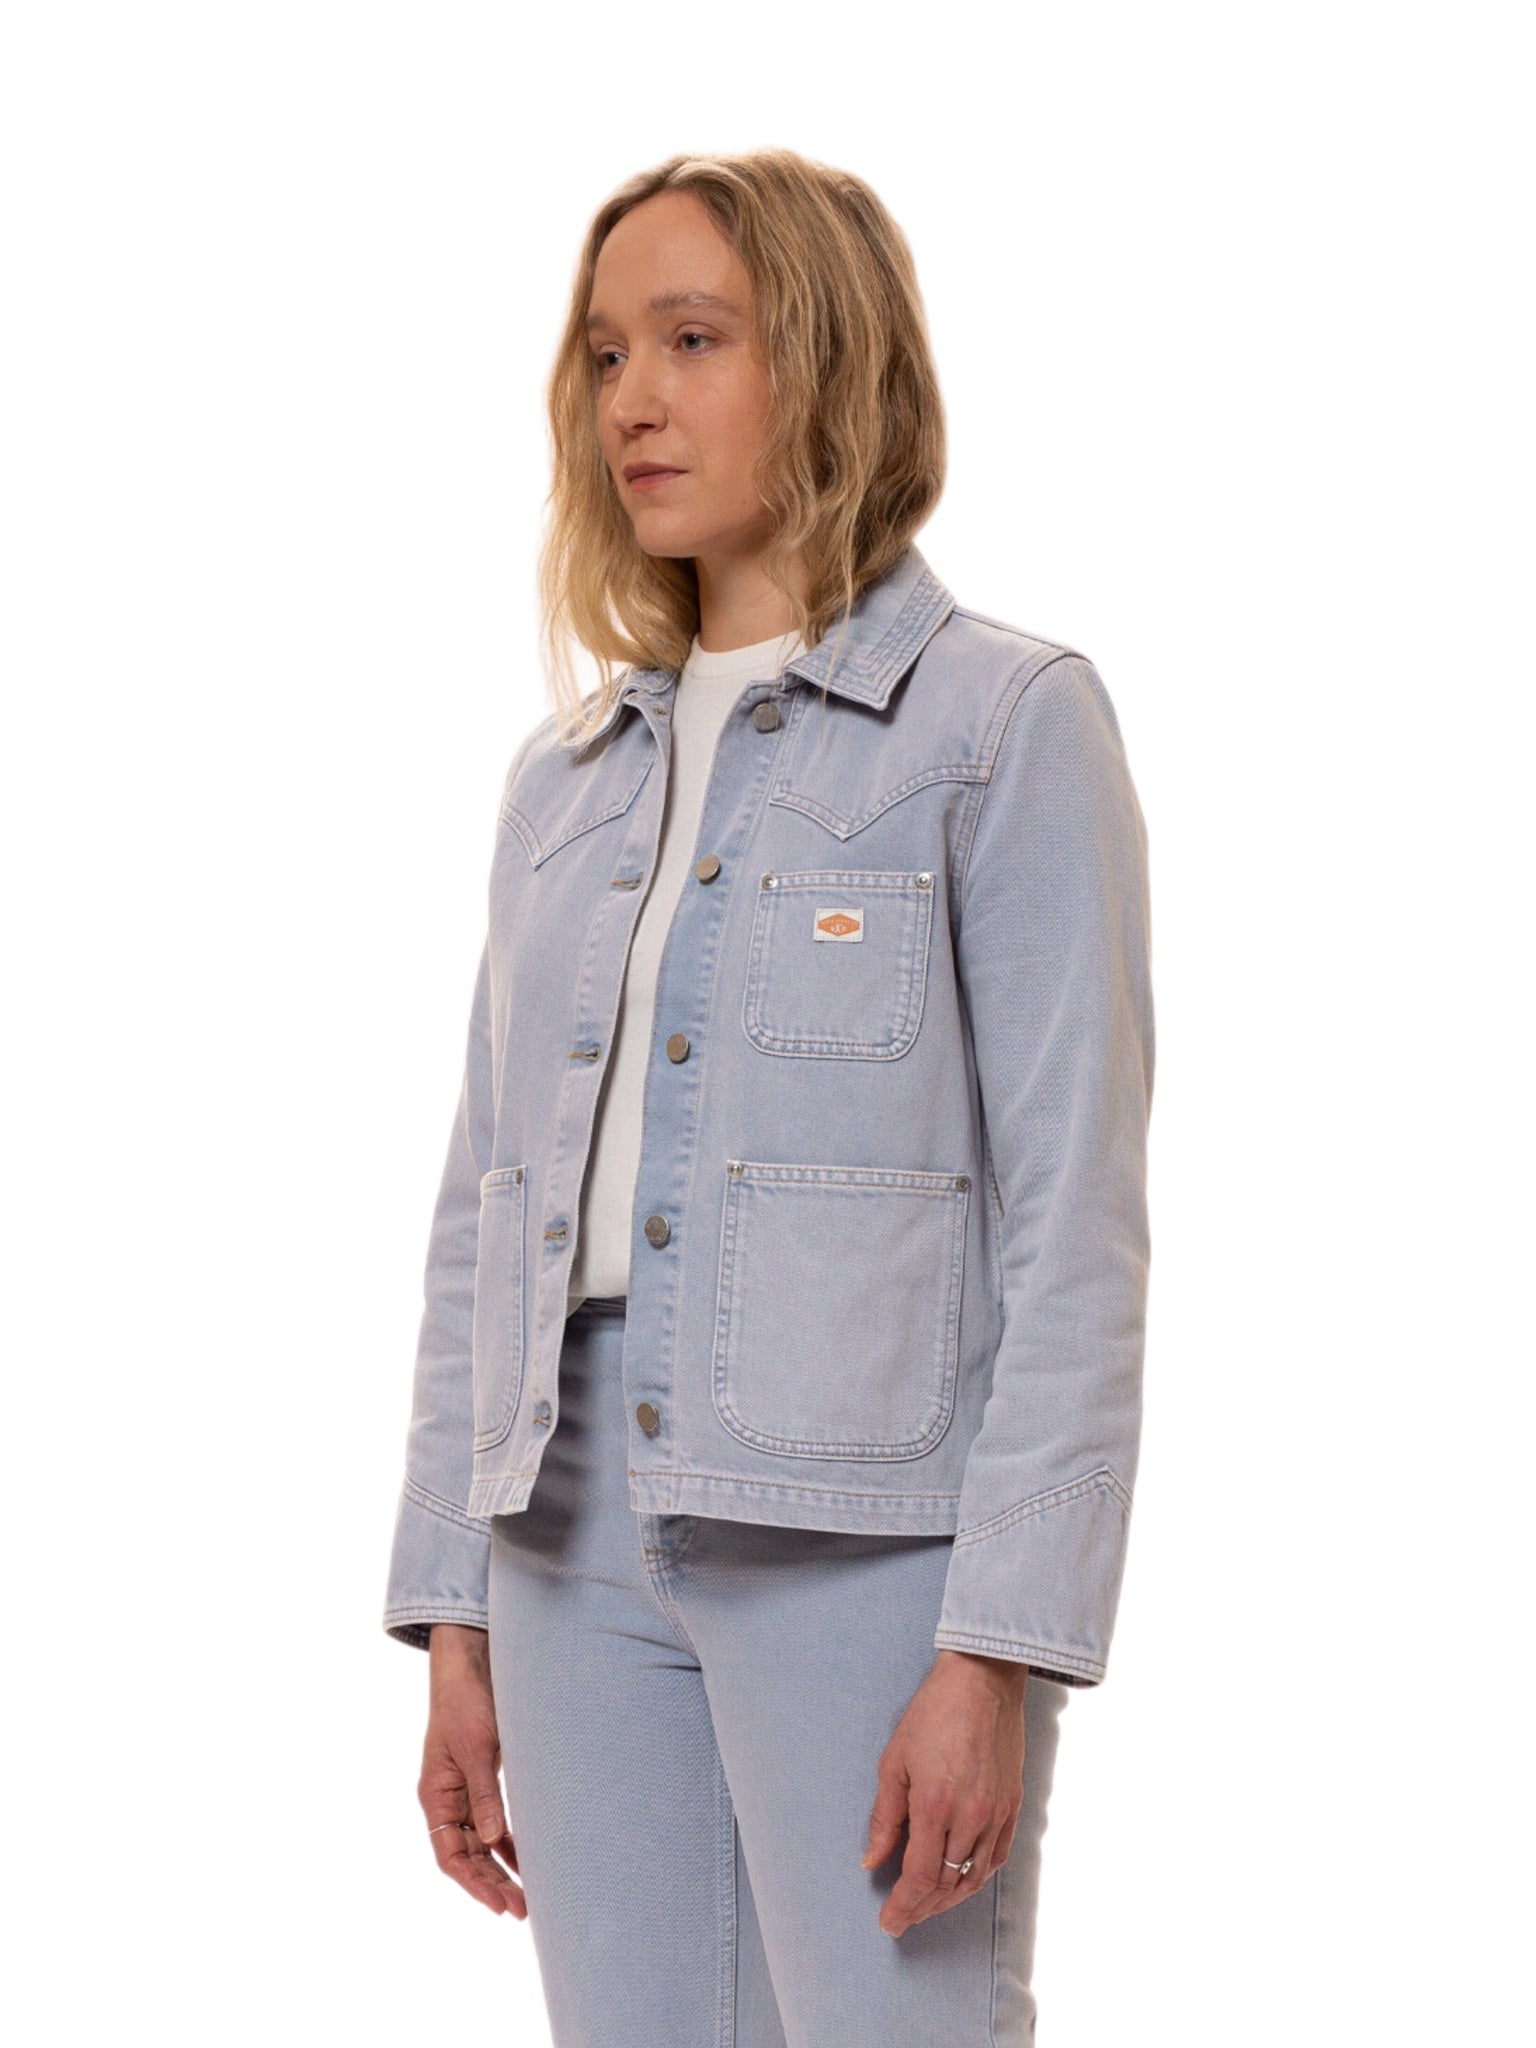 Klara Worker Jacket Purple Mist - INHABIT - Exclusive Stockist of Nudie Jeans